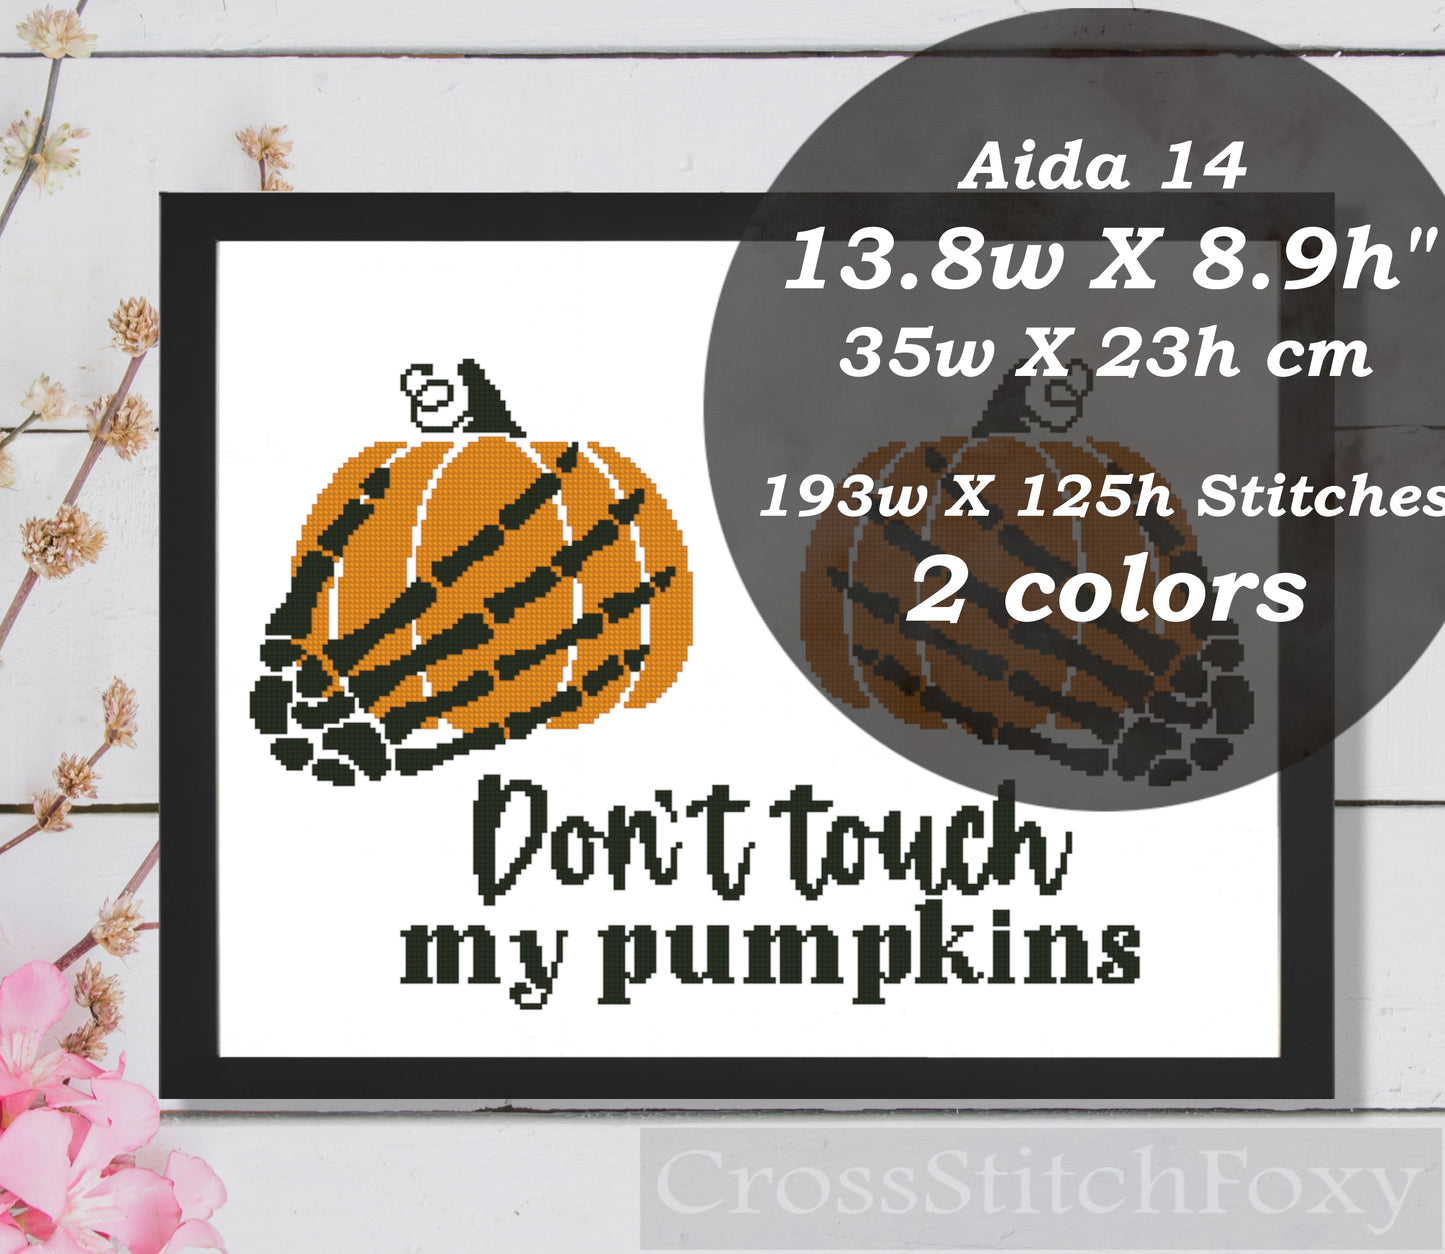 Don't touch my pumpkins cross stitch pattern